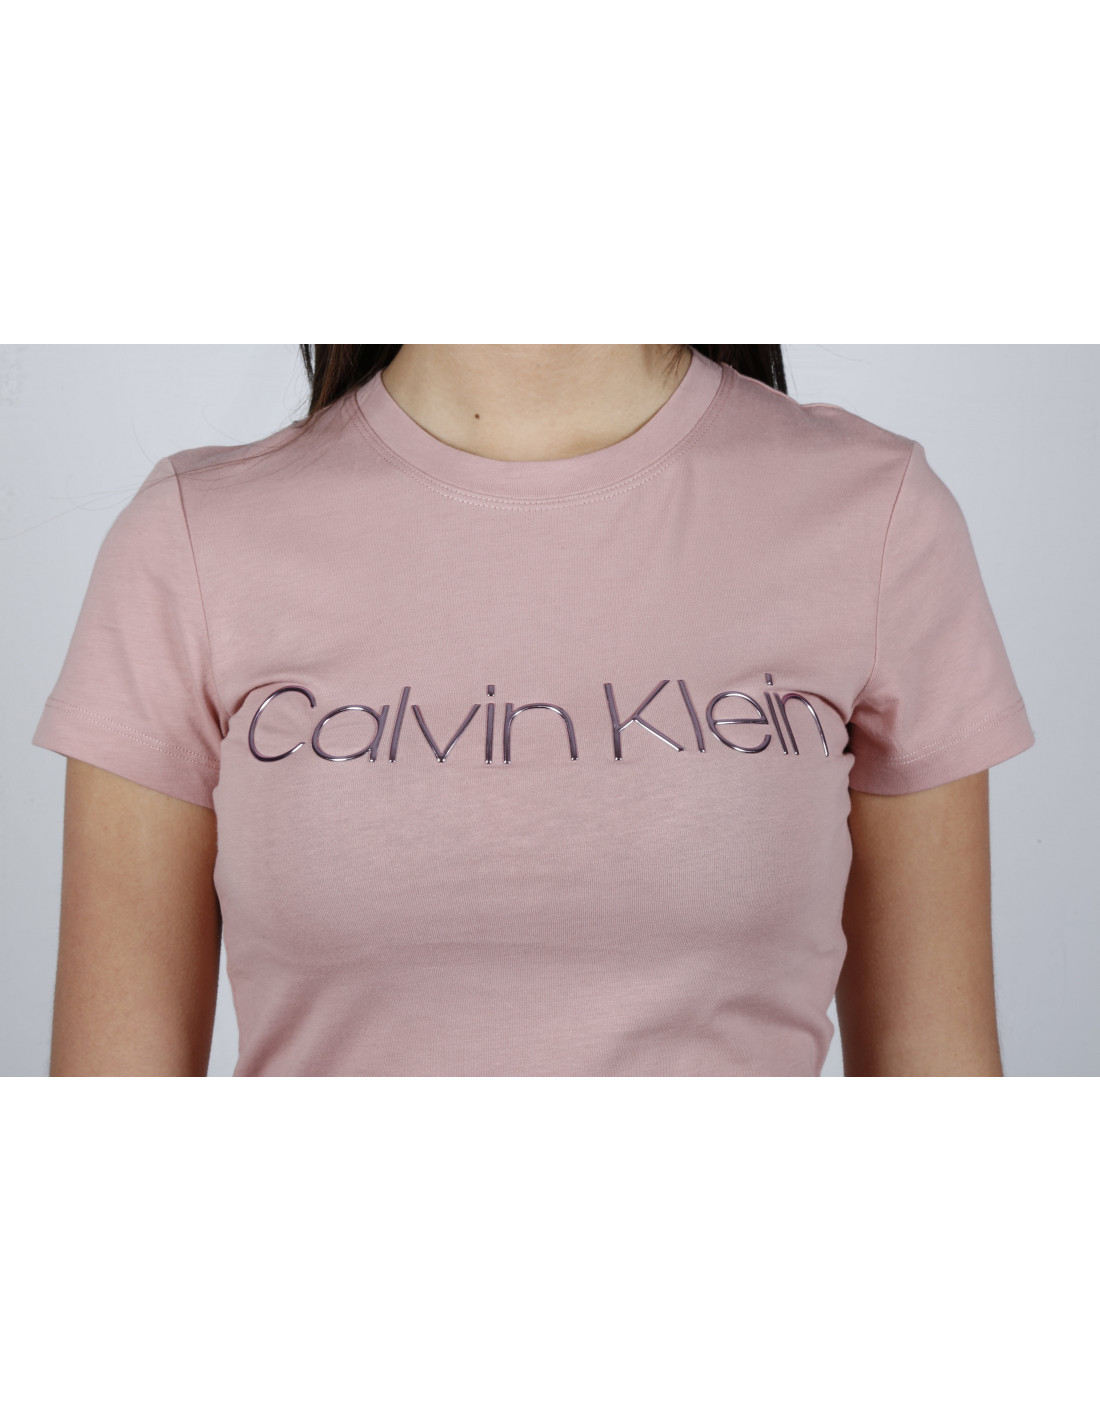 Calvin Klein slim fit women's pink t-shirt with logo Taglia XXS Color Pink